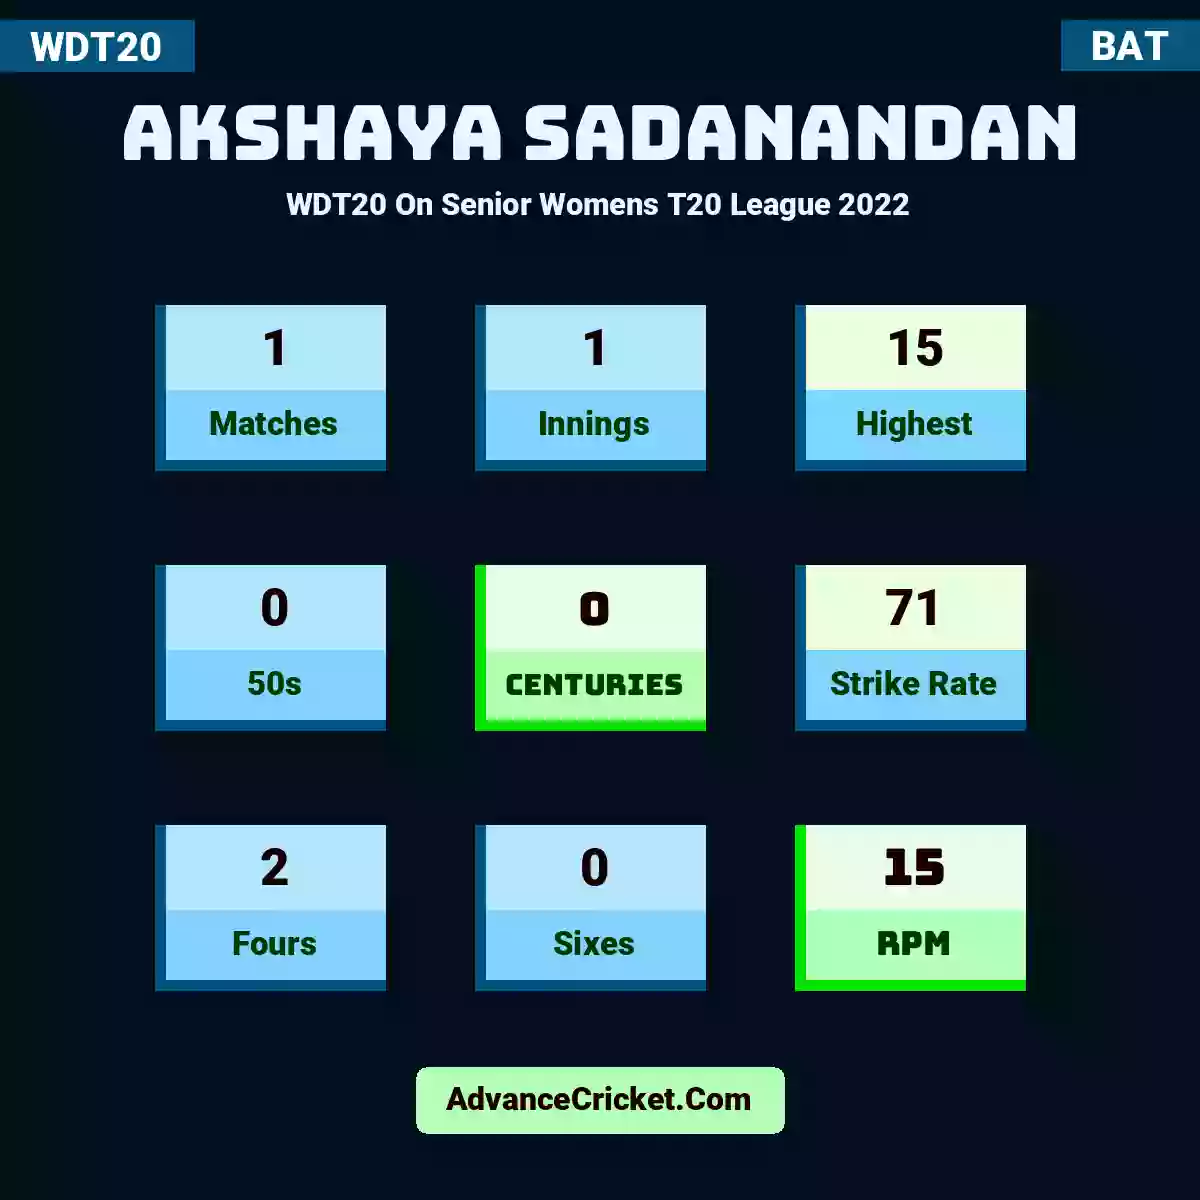 Akshaya Sadanandan WDT20  On Senior Womens T20 League 2022, Akshaya Sadanandan played 1 matches, scored 15 runs as highest, 0 half-centuries, and 0 centuries, with a strike rate of 71. A.Sadanandan hit 2 fours and 0 sixes, with an RPM of 15.